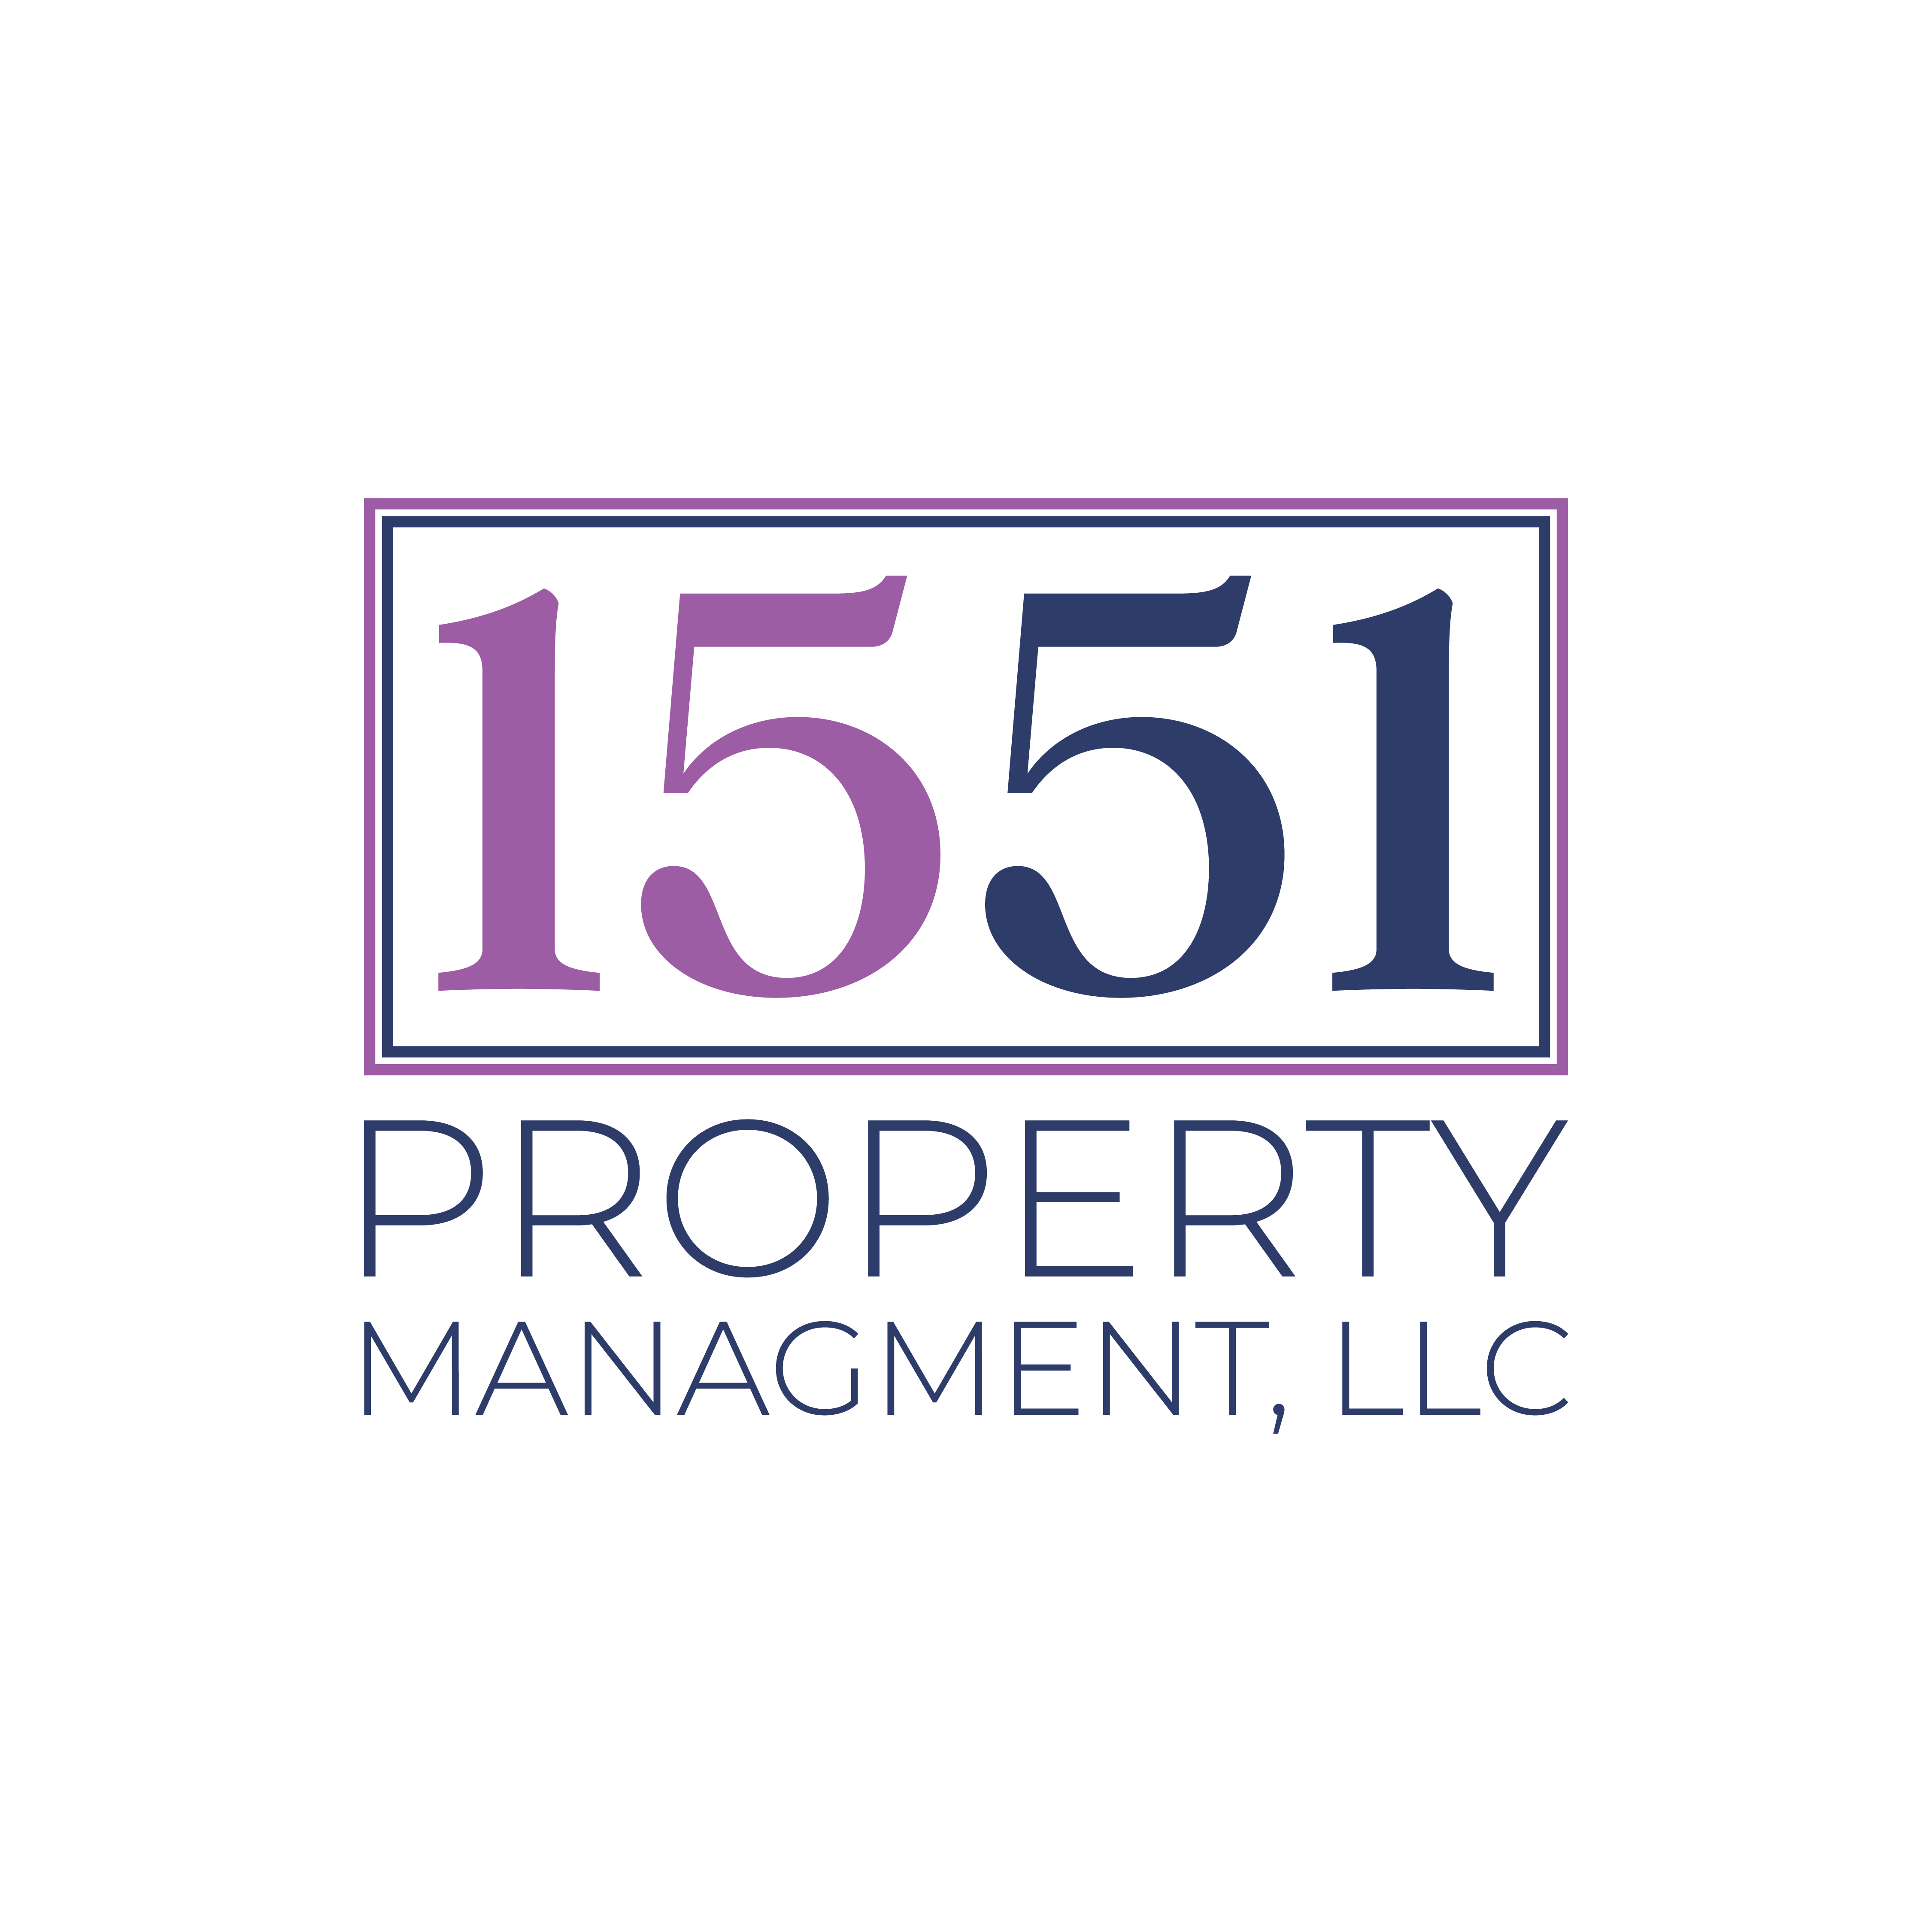 1551 Property Management, LLC